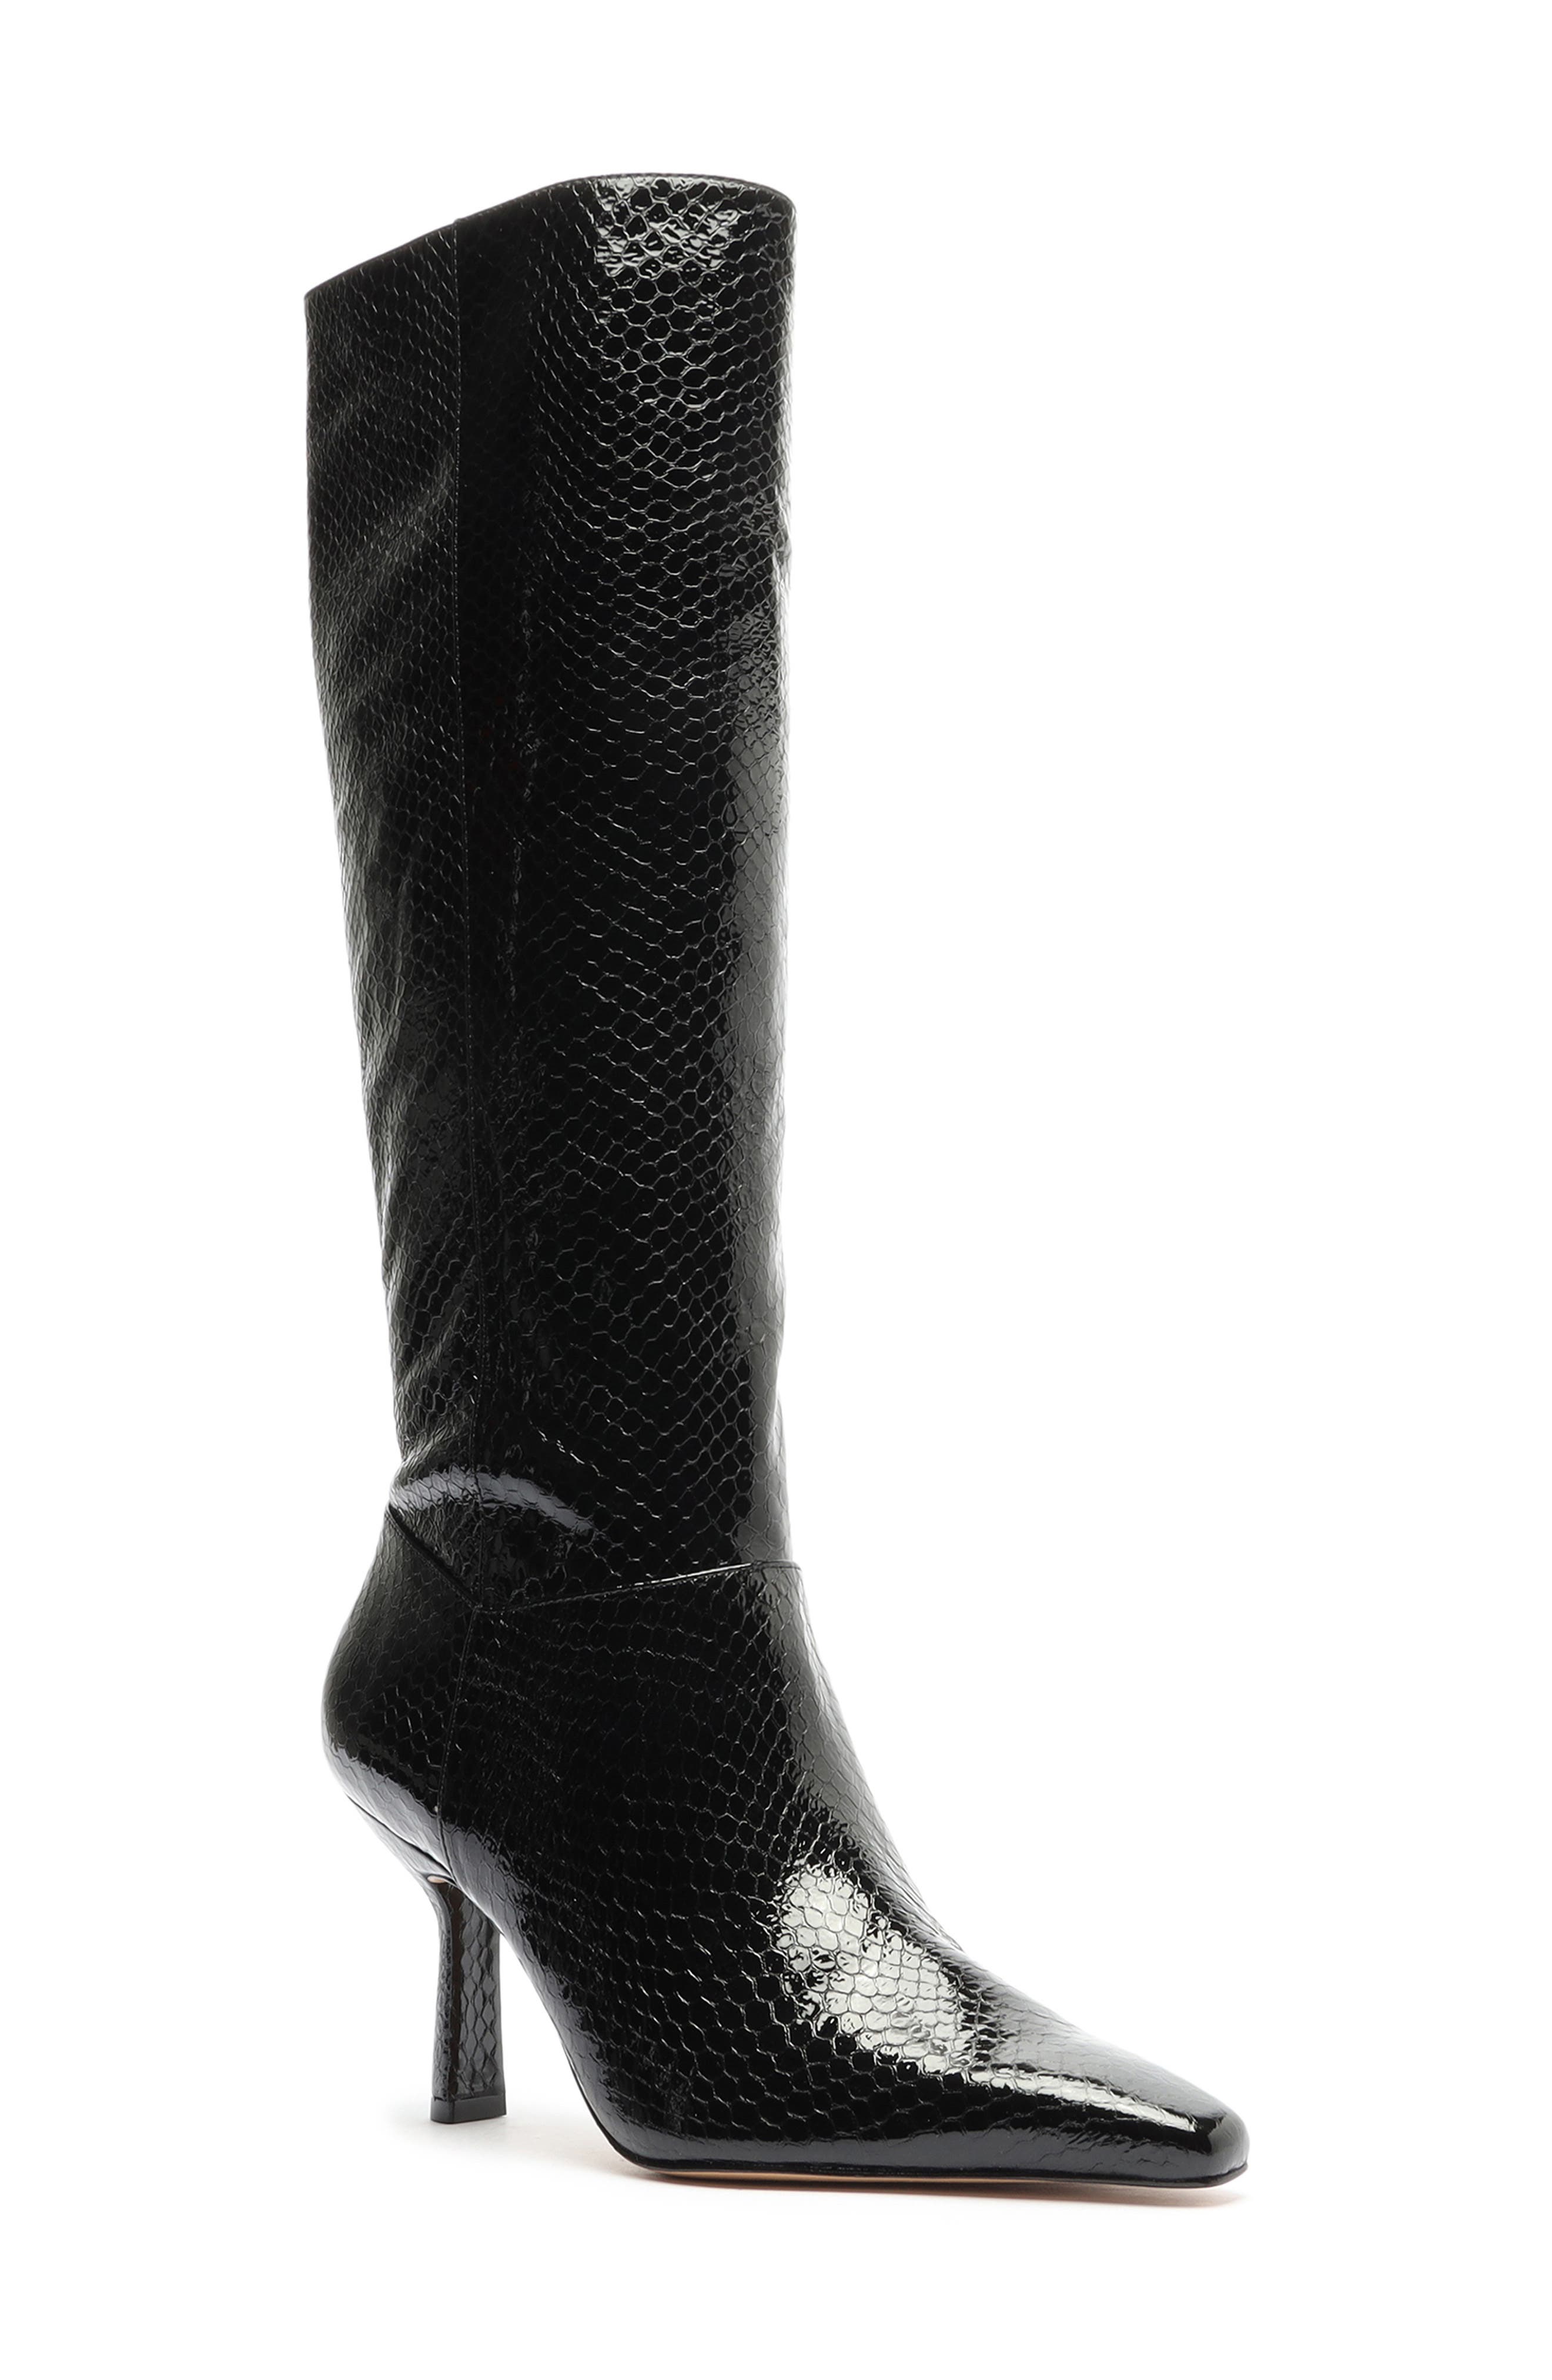 Schutz Women's Luizia Bootie, Black, 8, Leather